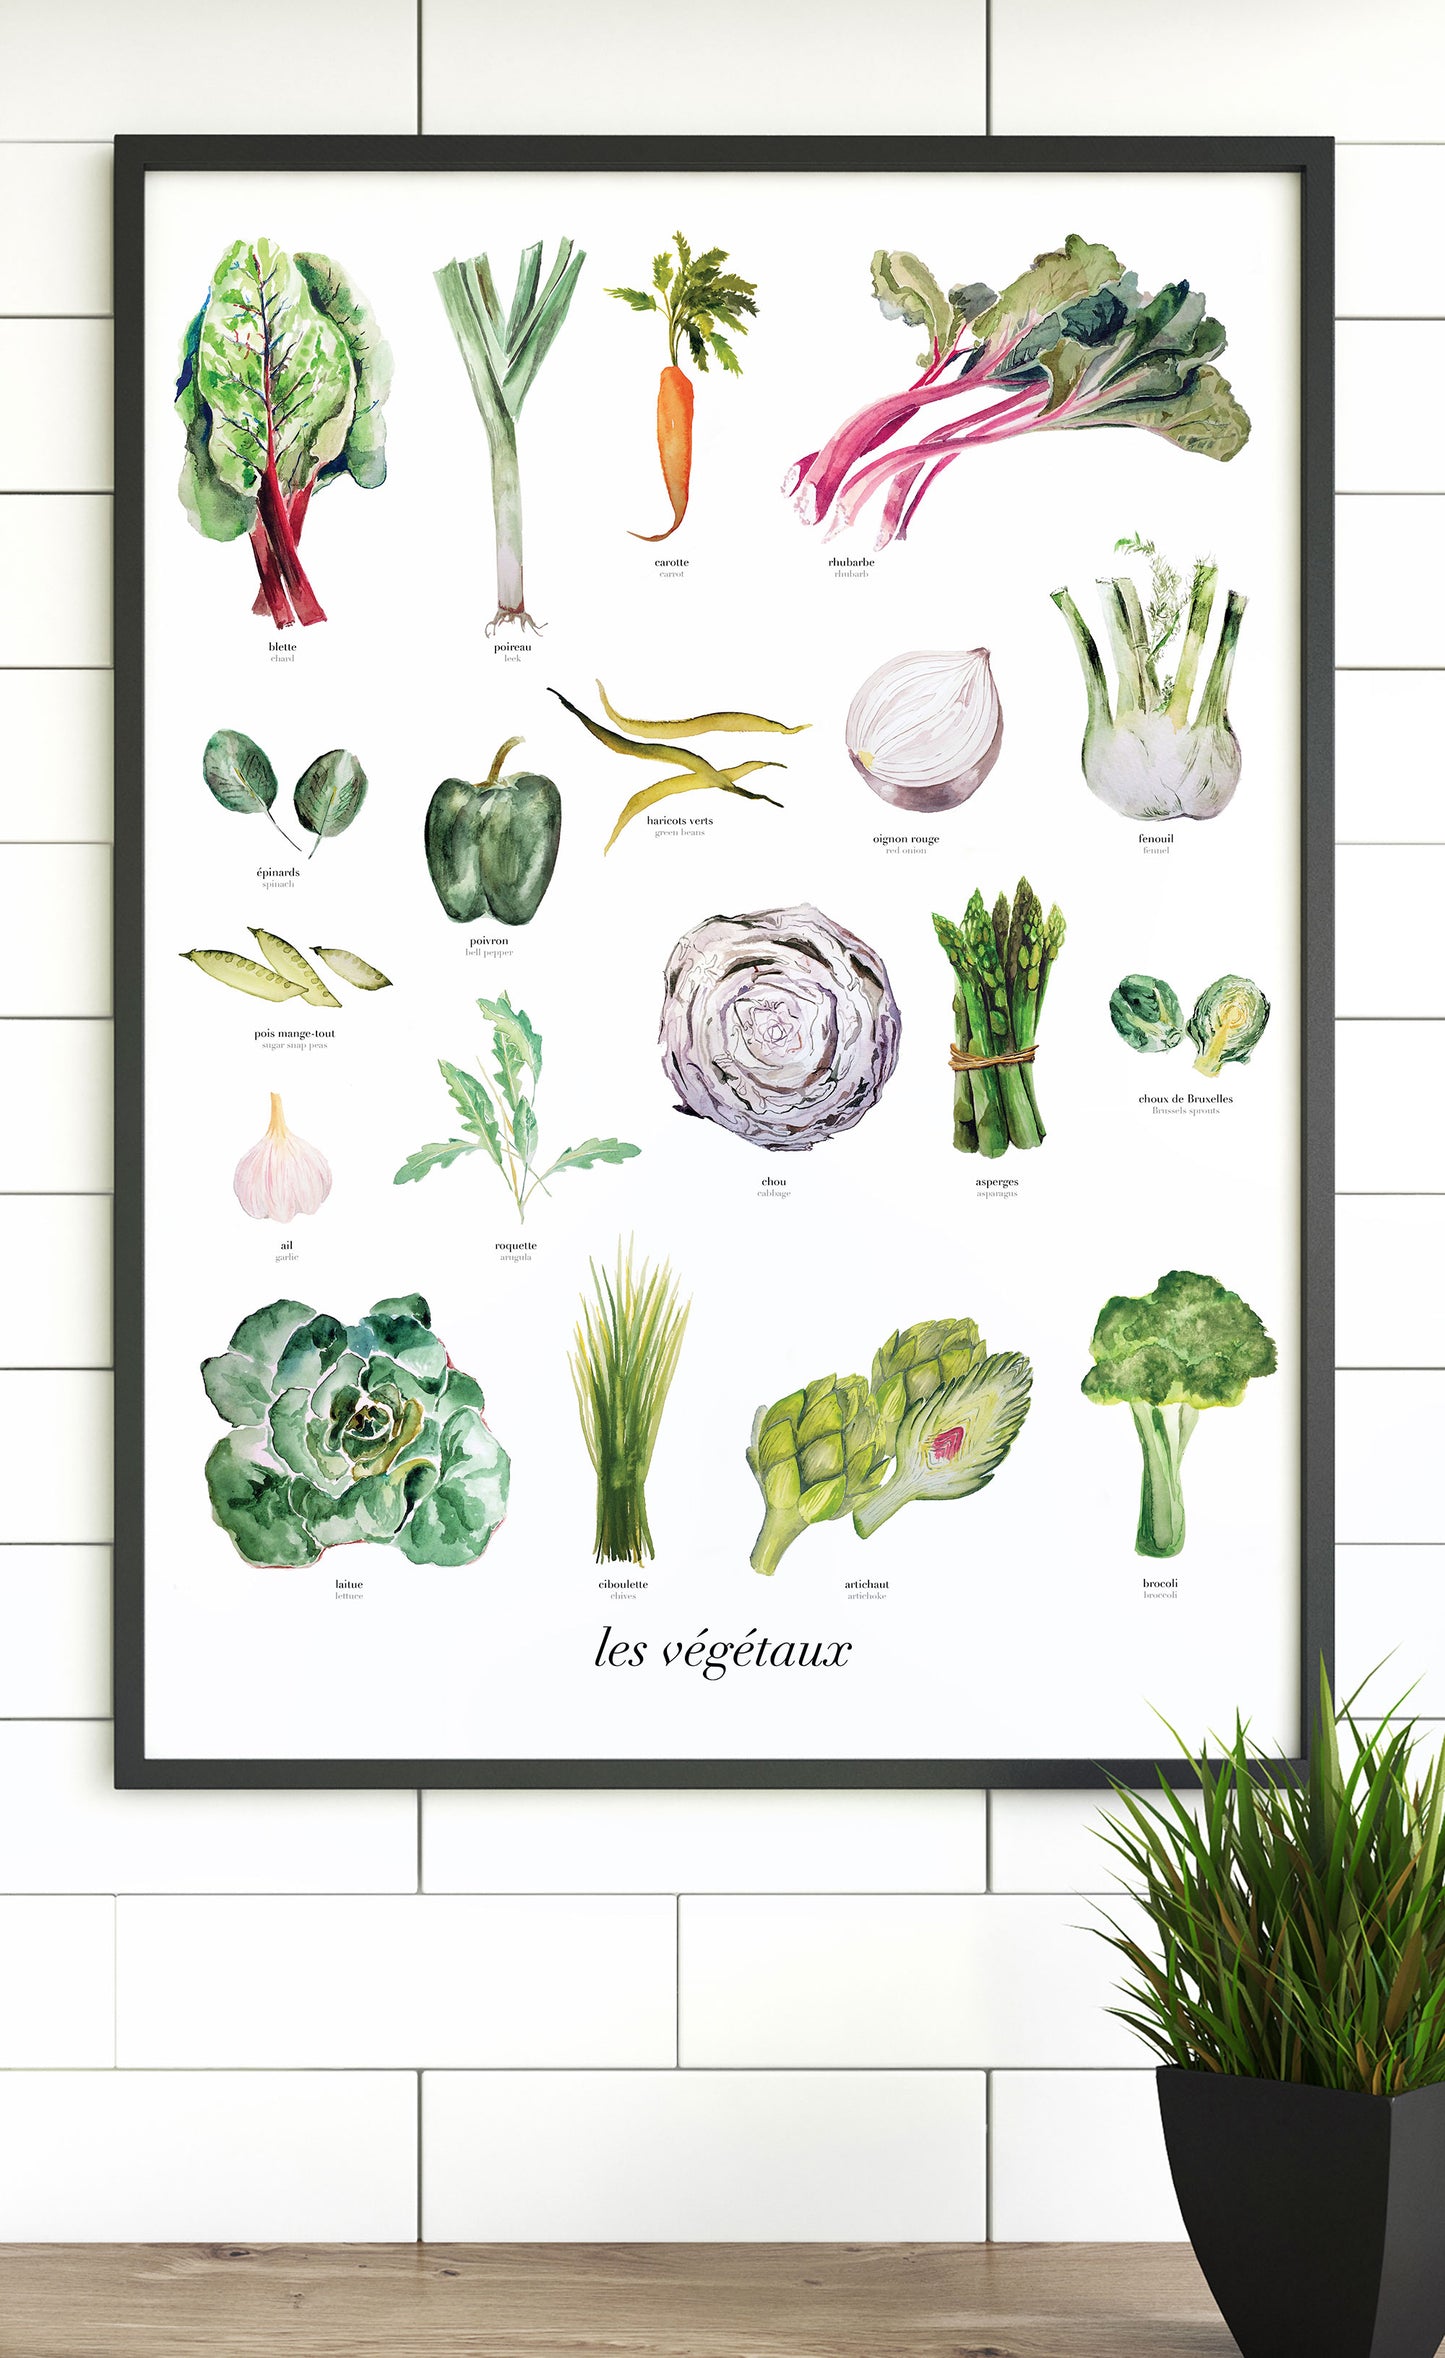 Fruits + Vegetables Art Print Set